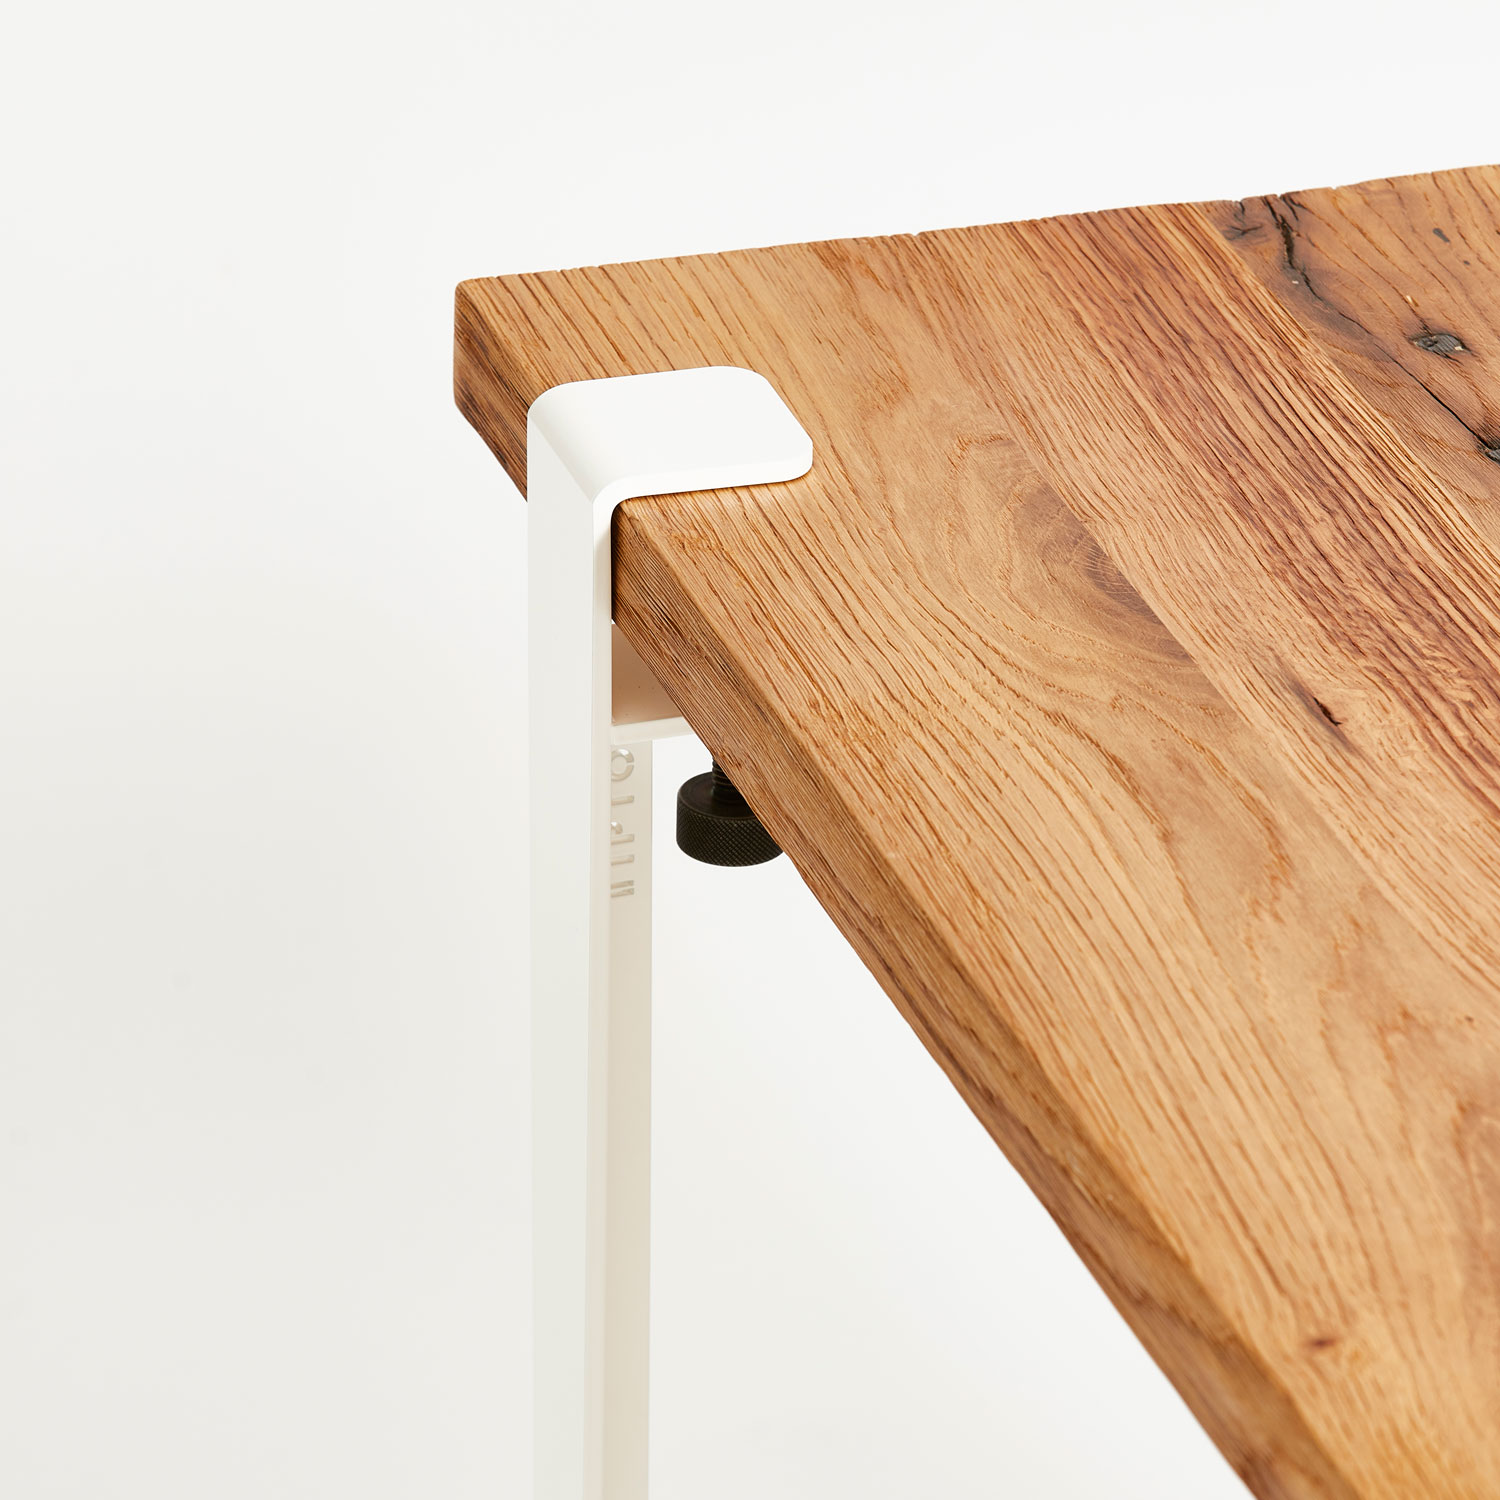 Unique coffee table top in reclaimed wood TIPTOE